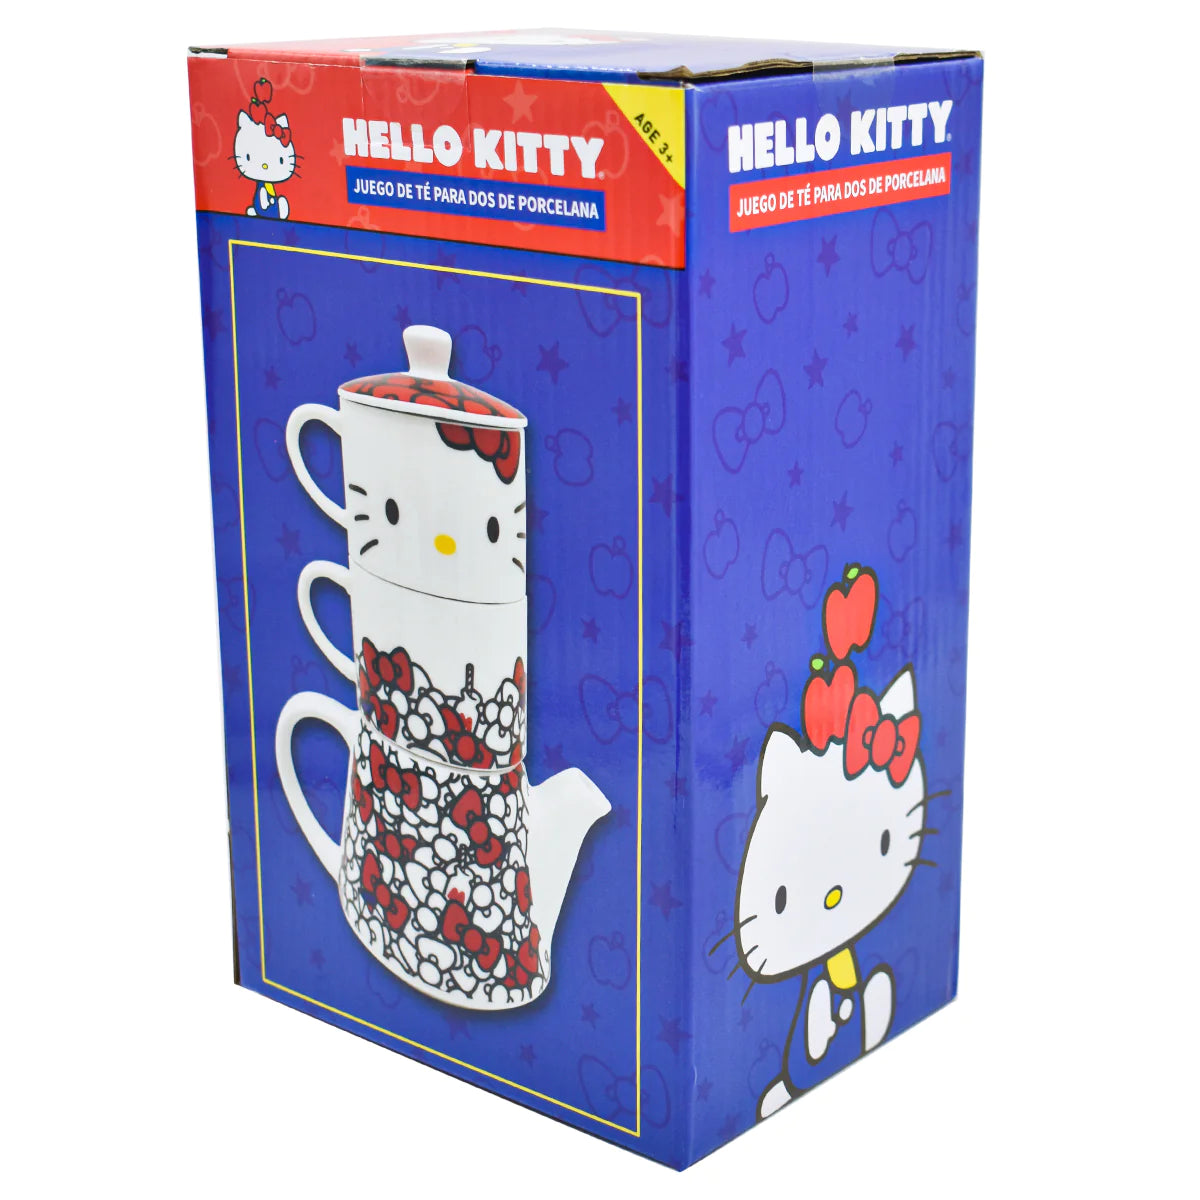 Set Juego Tetera con Tazas Apilable para 2 persona Fun kids Sanrio Hello Kitty Porcelana 4pzas